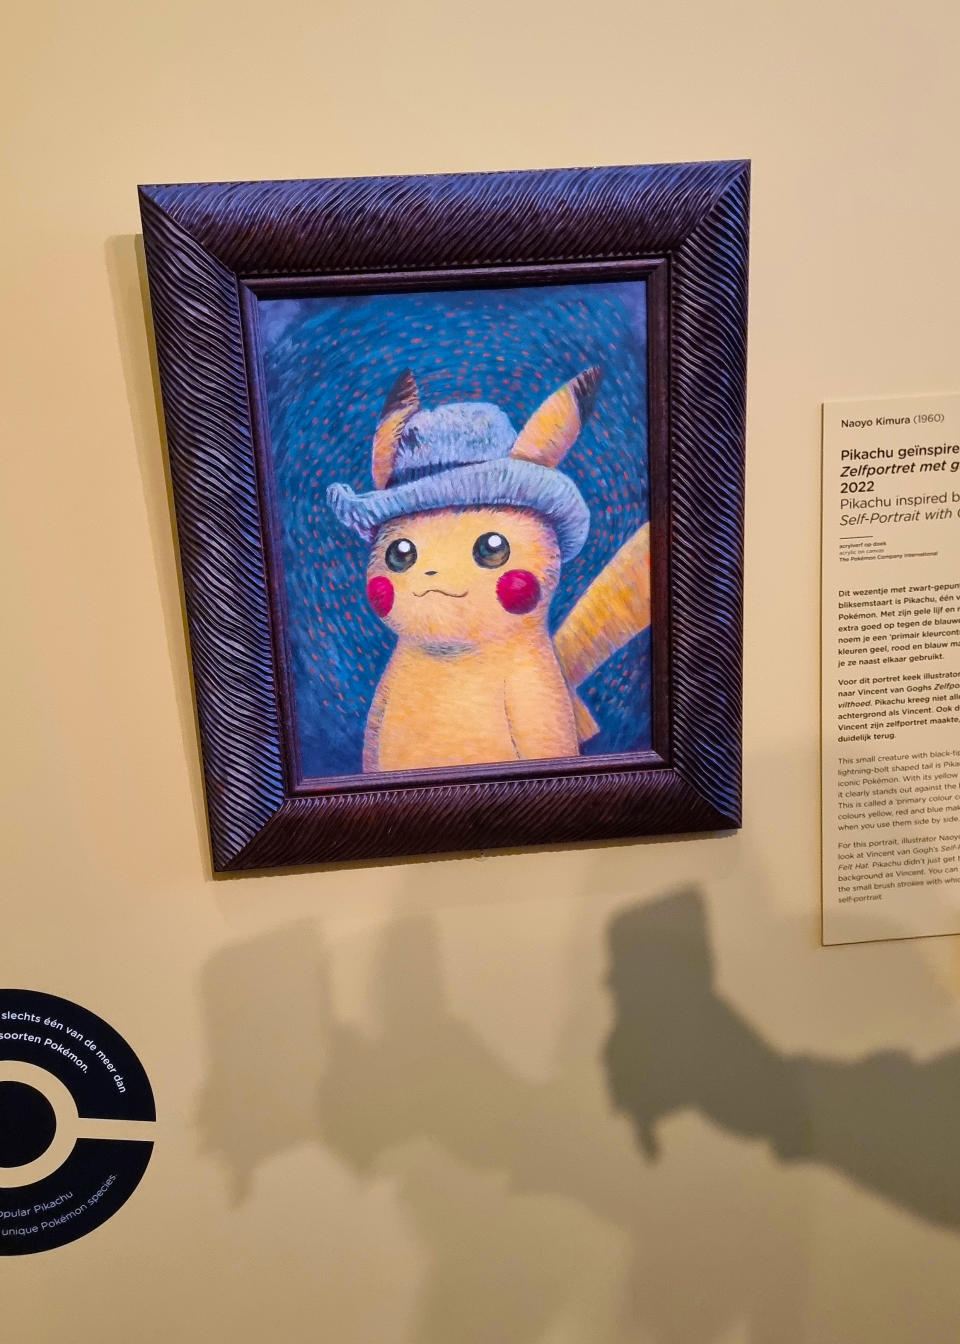 The Van Gogh x Pokemon exhibit at the official Van Gogh Museum in Amsterdam